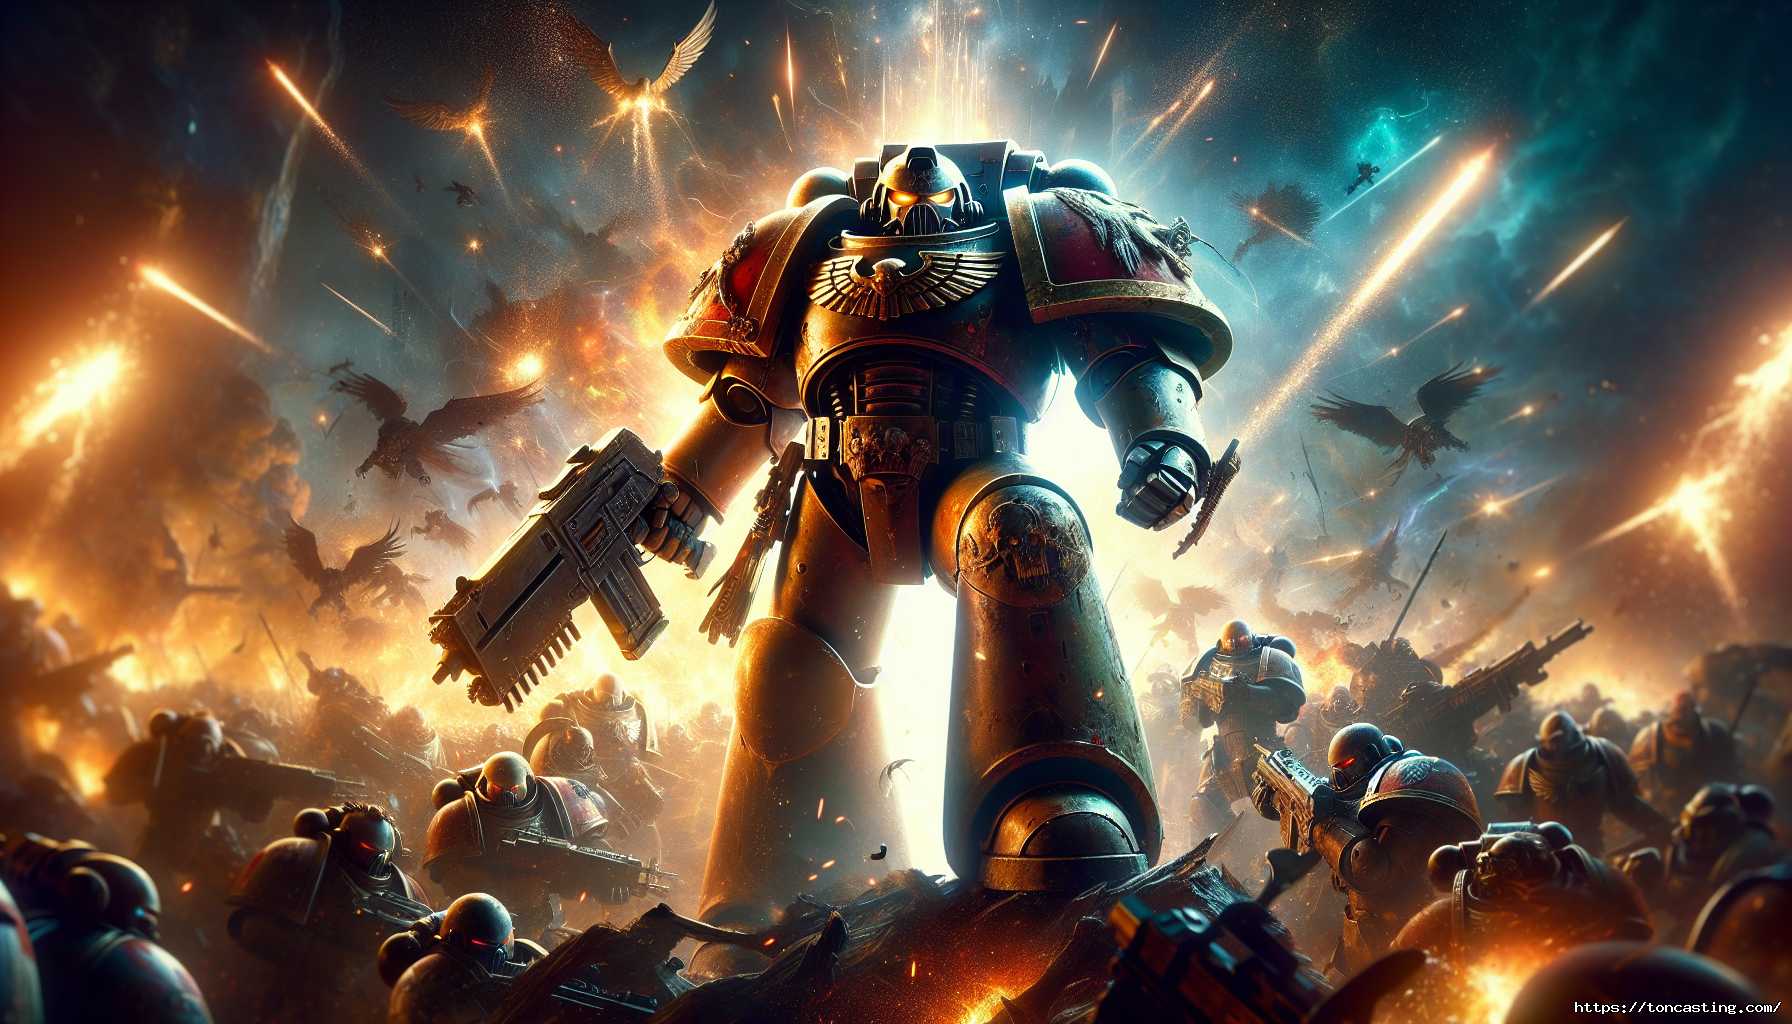 Warhammer 40,000 : Space Marine 2 dévoile son gameplay explosif et son système de progression